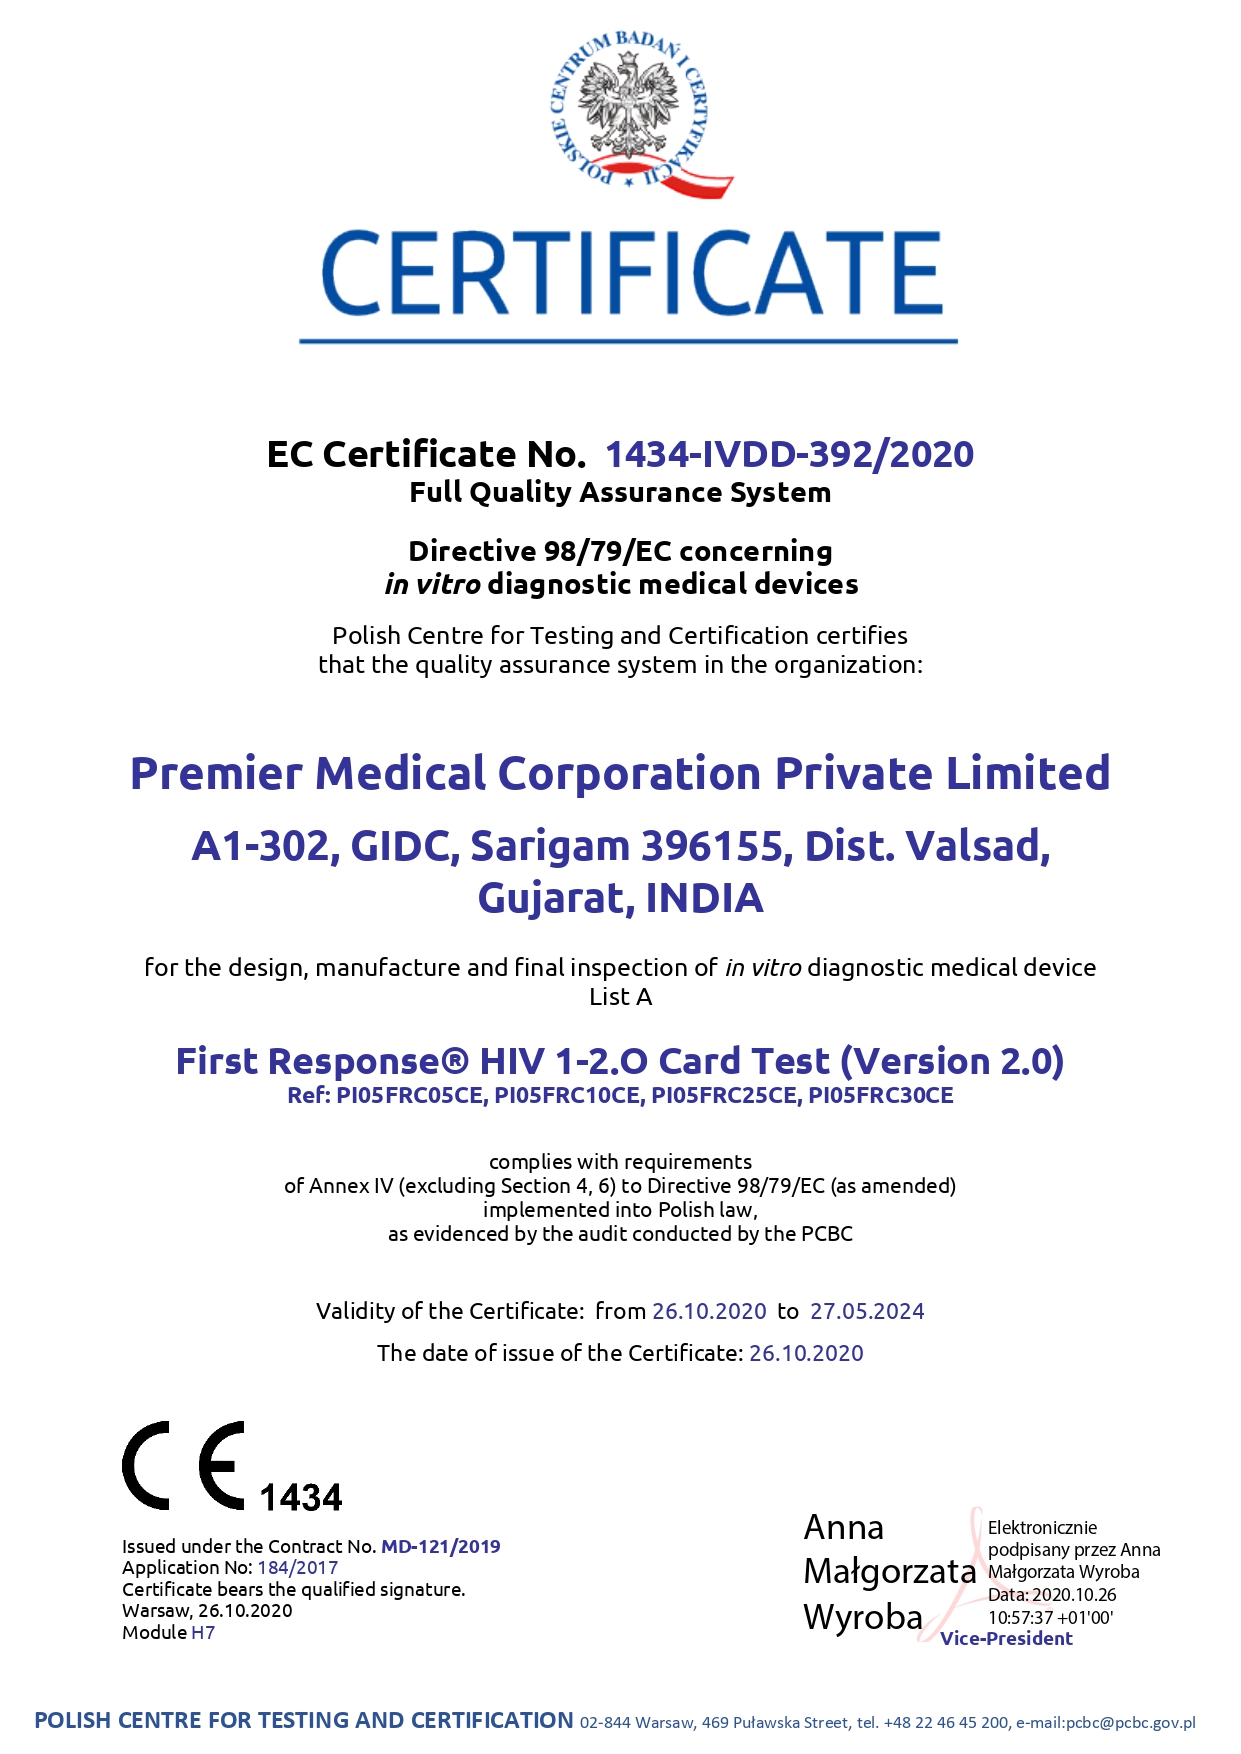 HIV 1-2.O CE Certificate